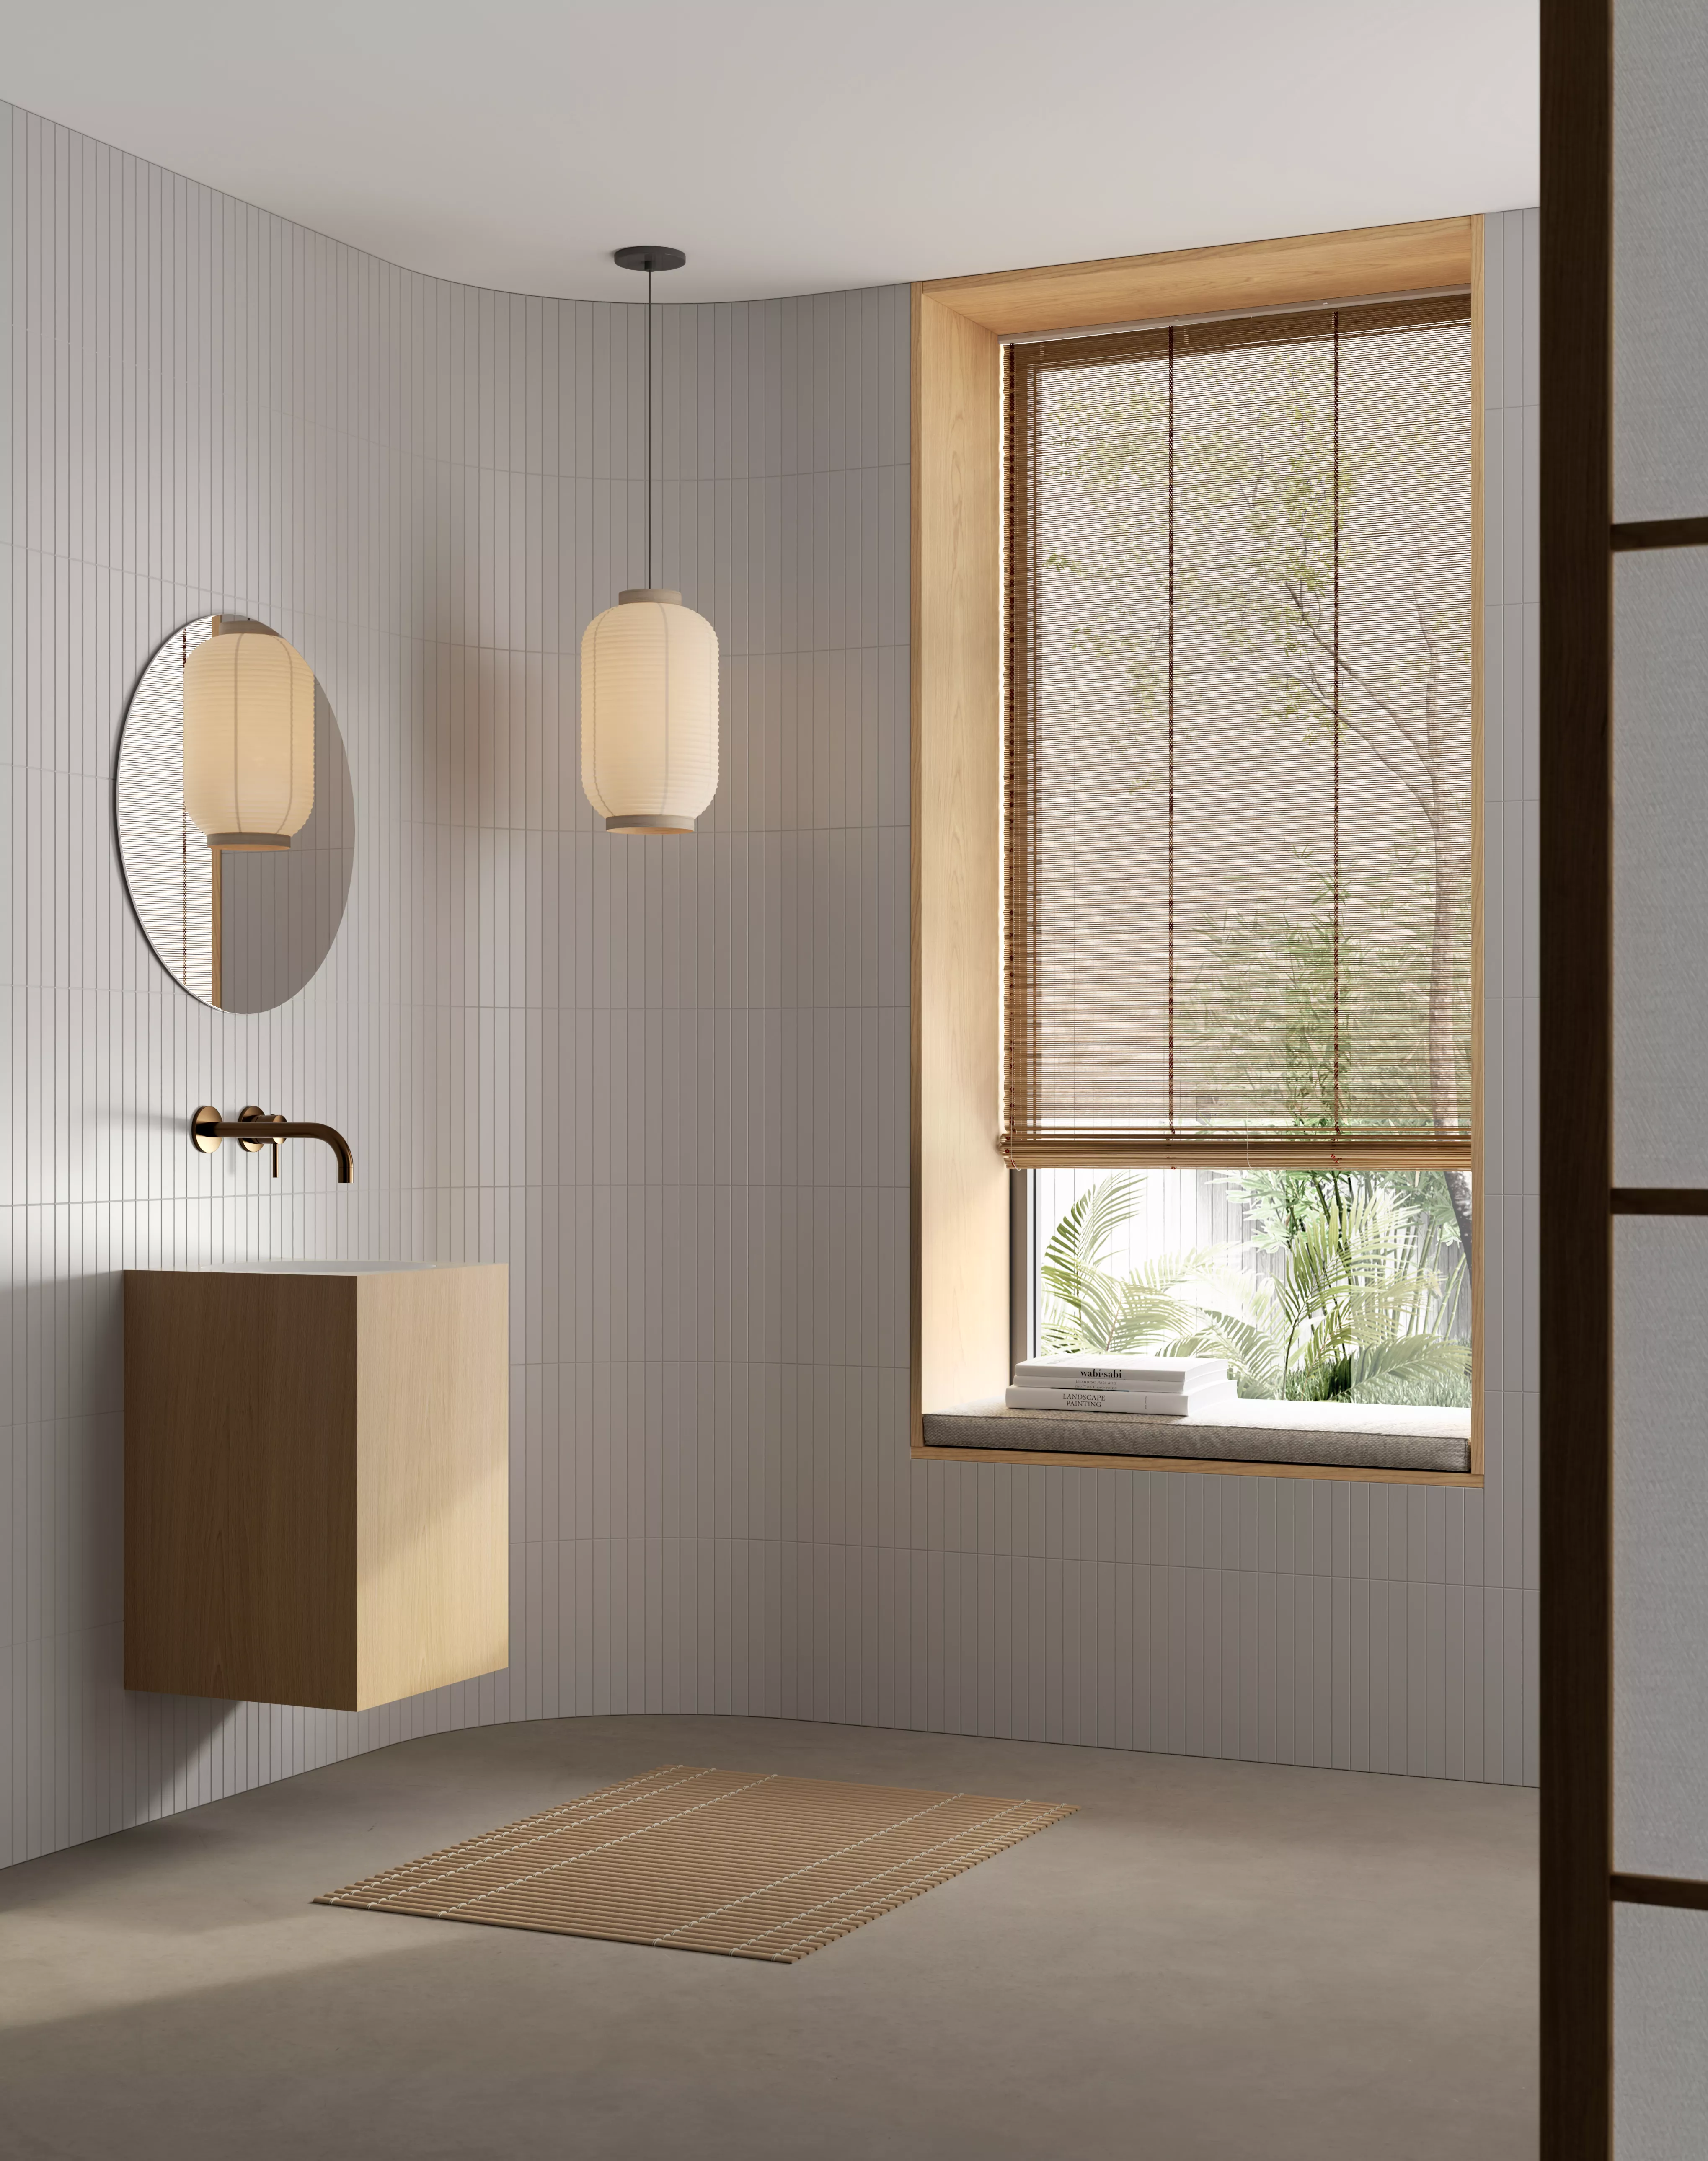 HIMACS and Marike Andeweg present four new bathroom trends